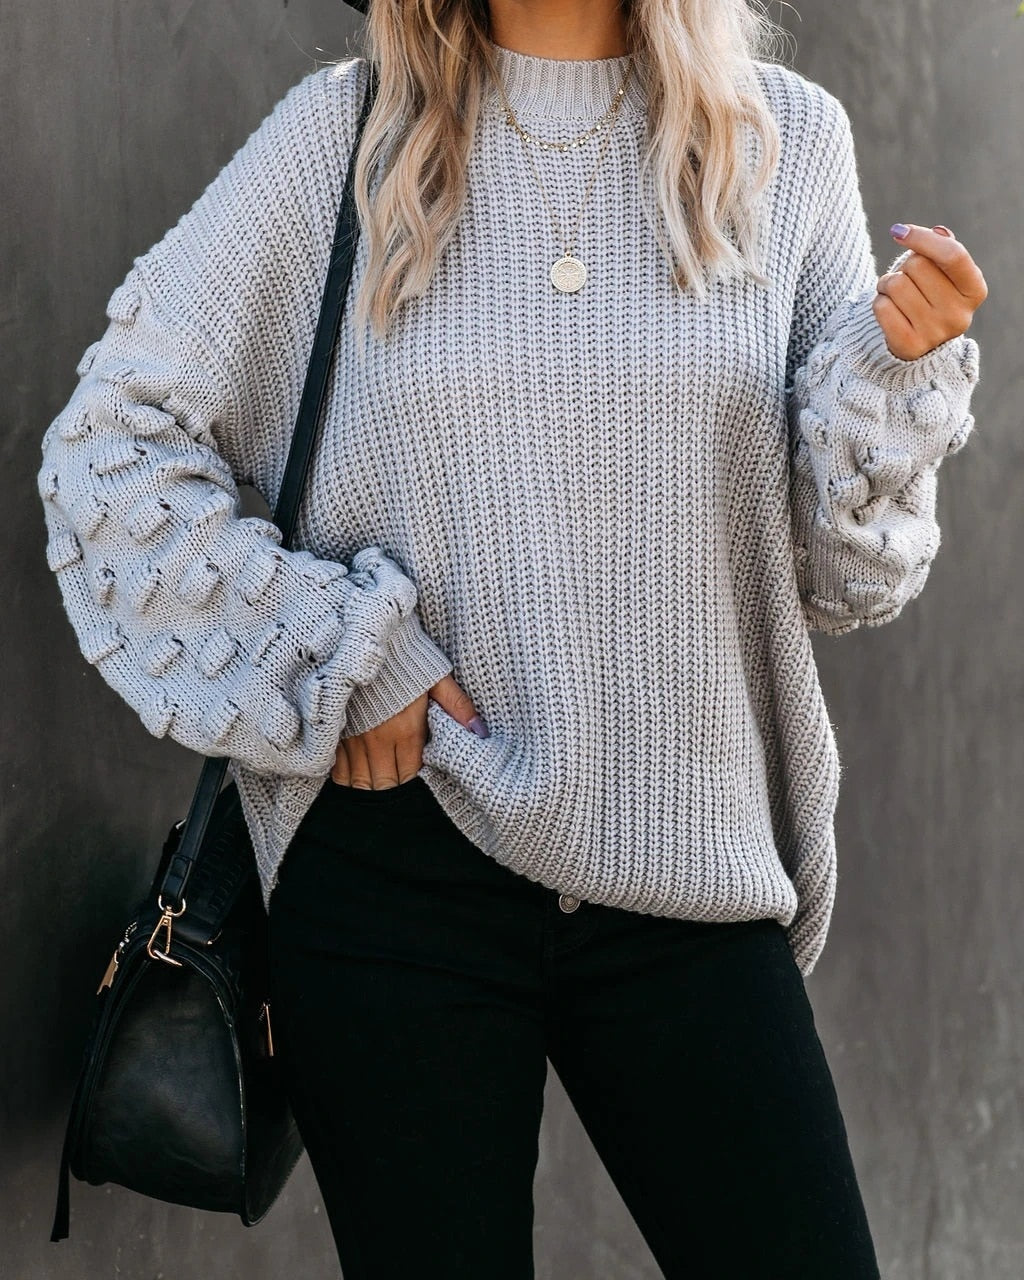 Sweater Algarrobo - Klouss - Chile - Mujer - Sweater - invierno, Oferta, Otoño / Invierno, sweater